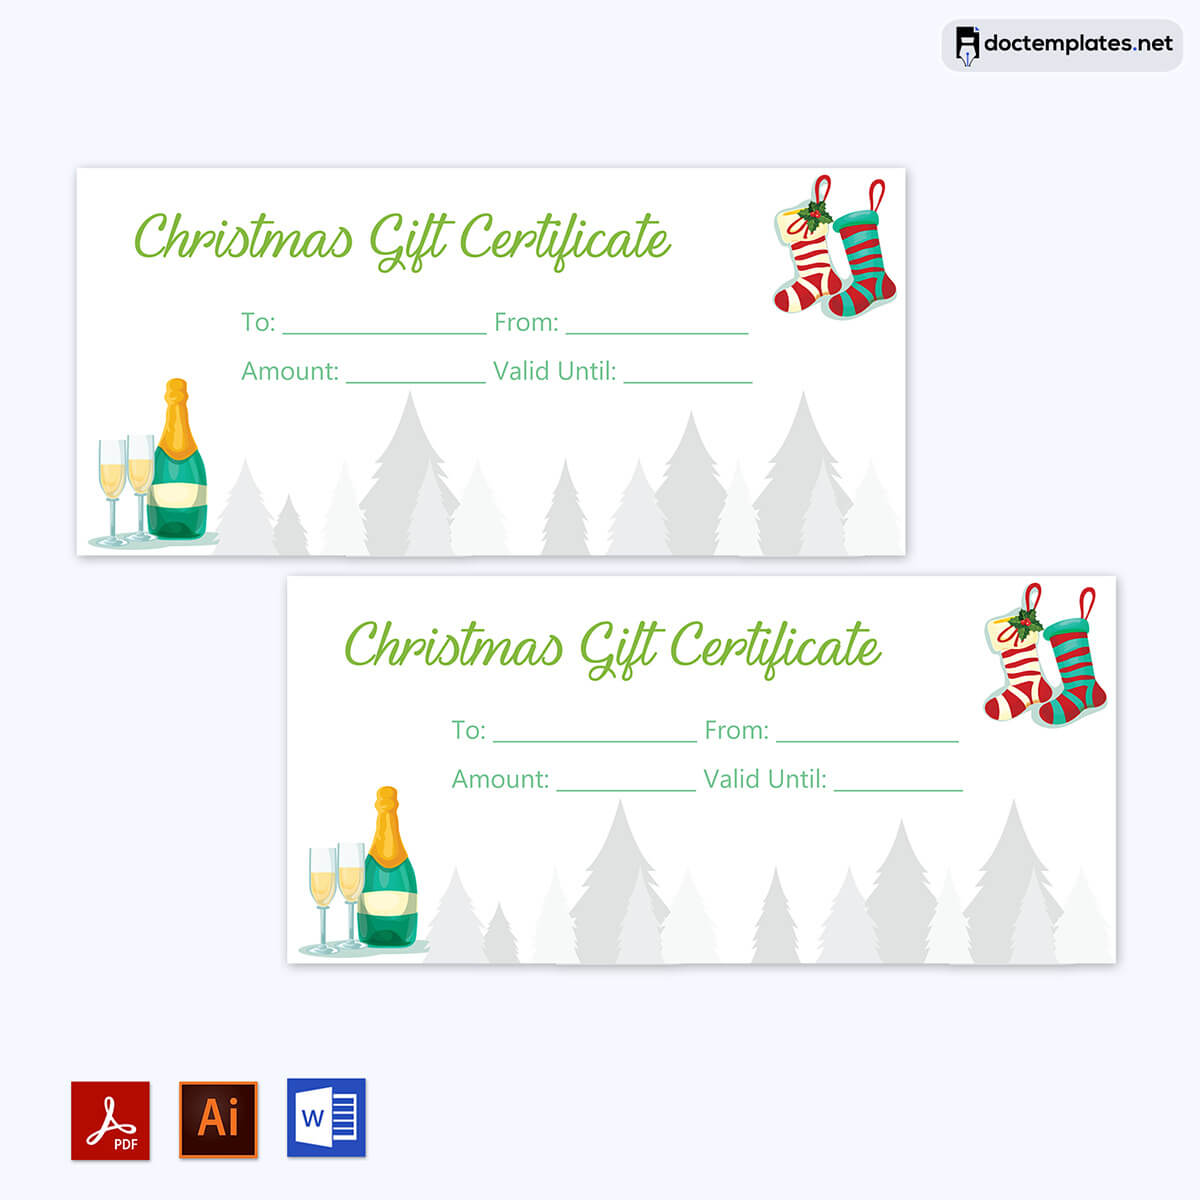 Canva gift certificate 09